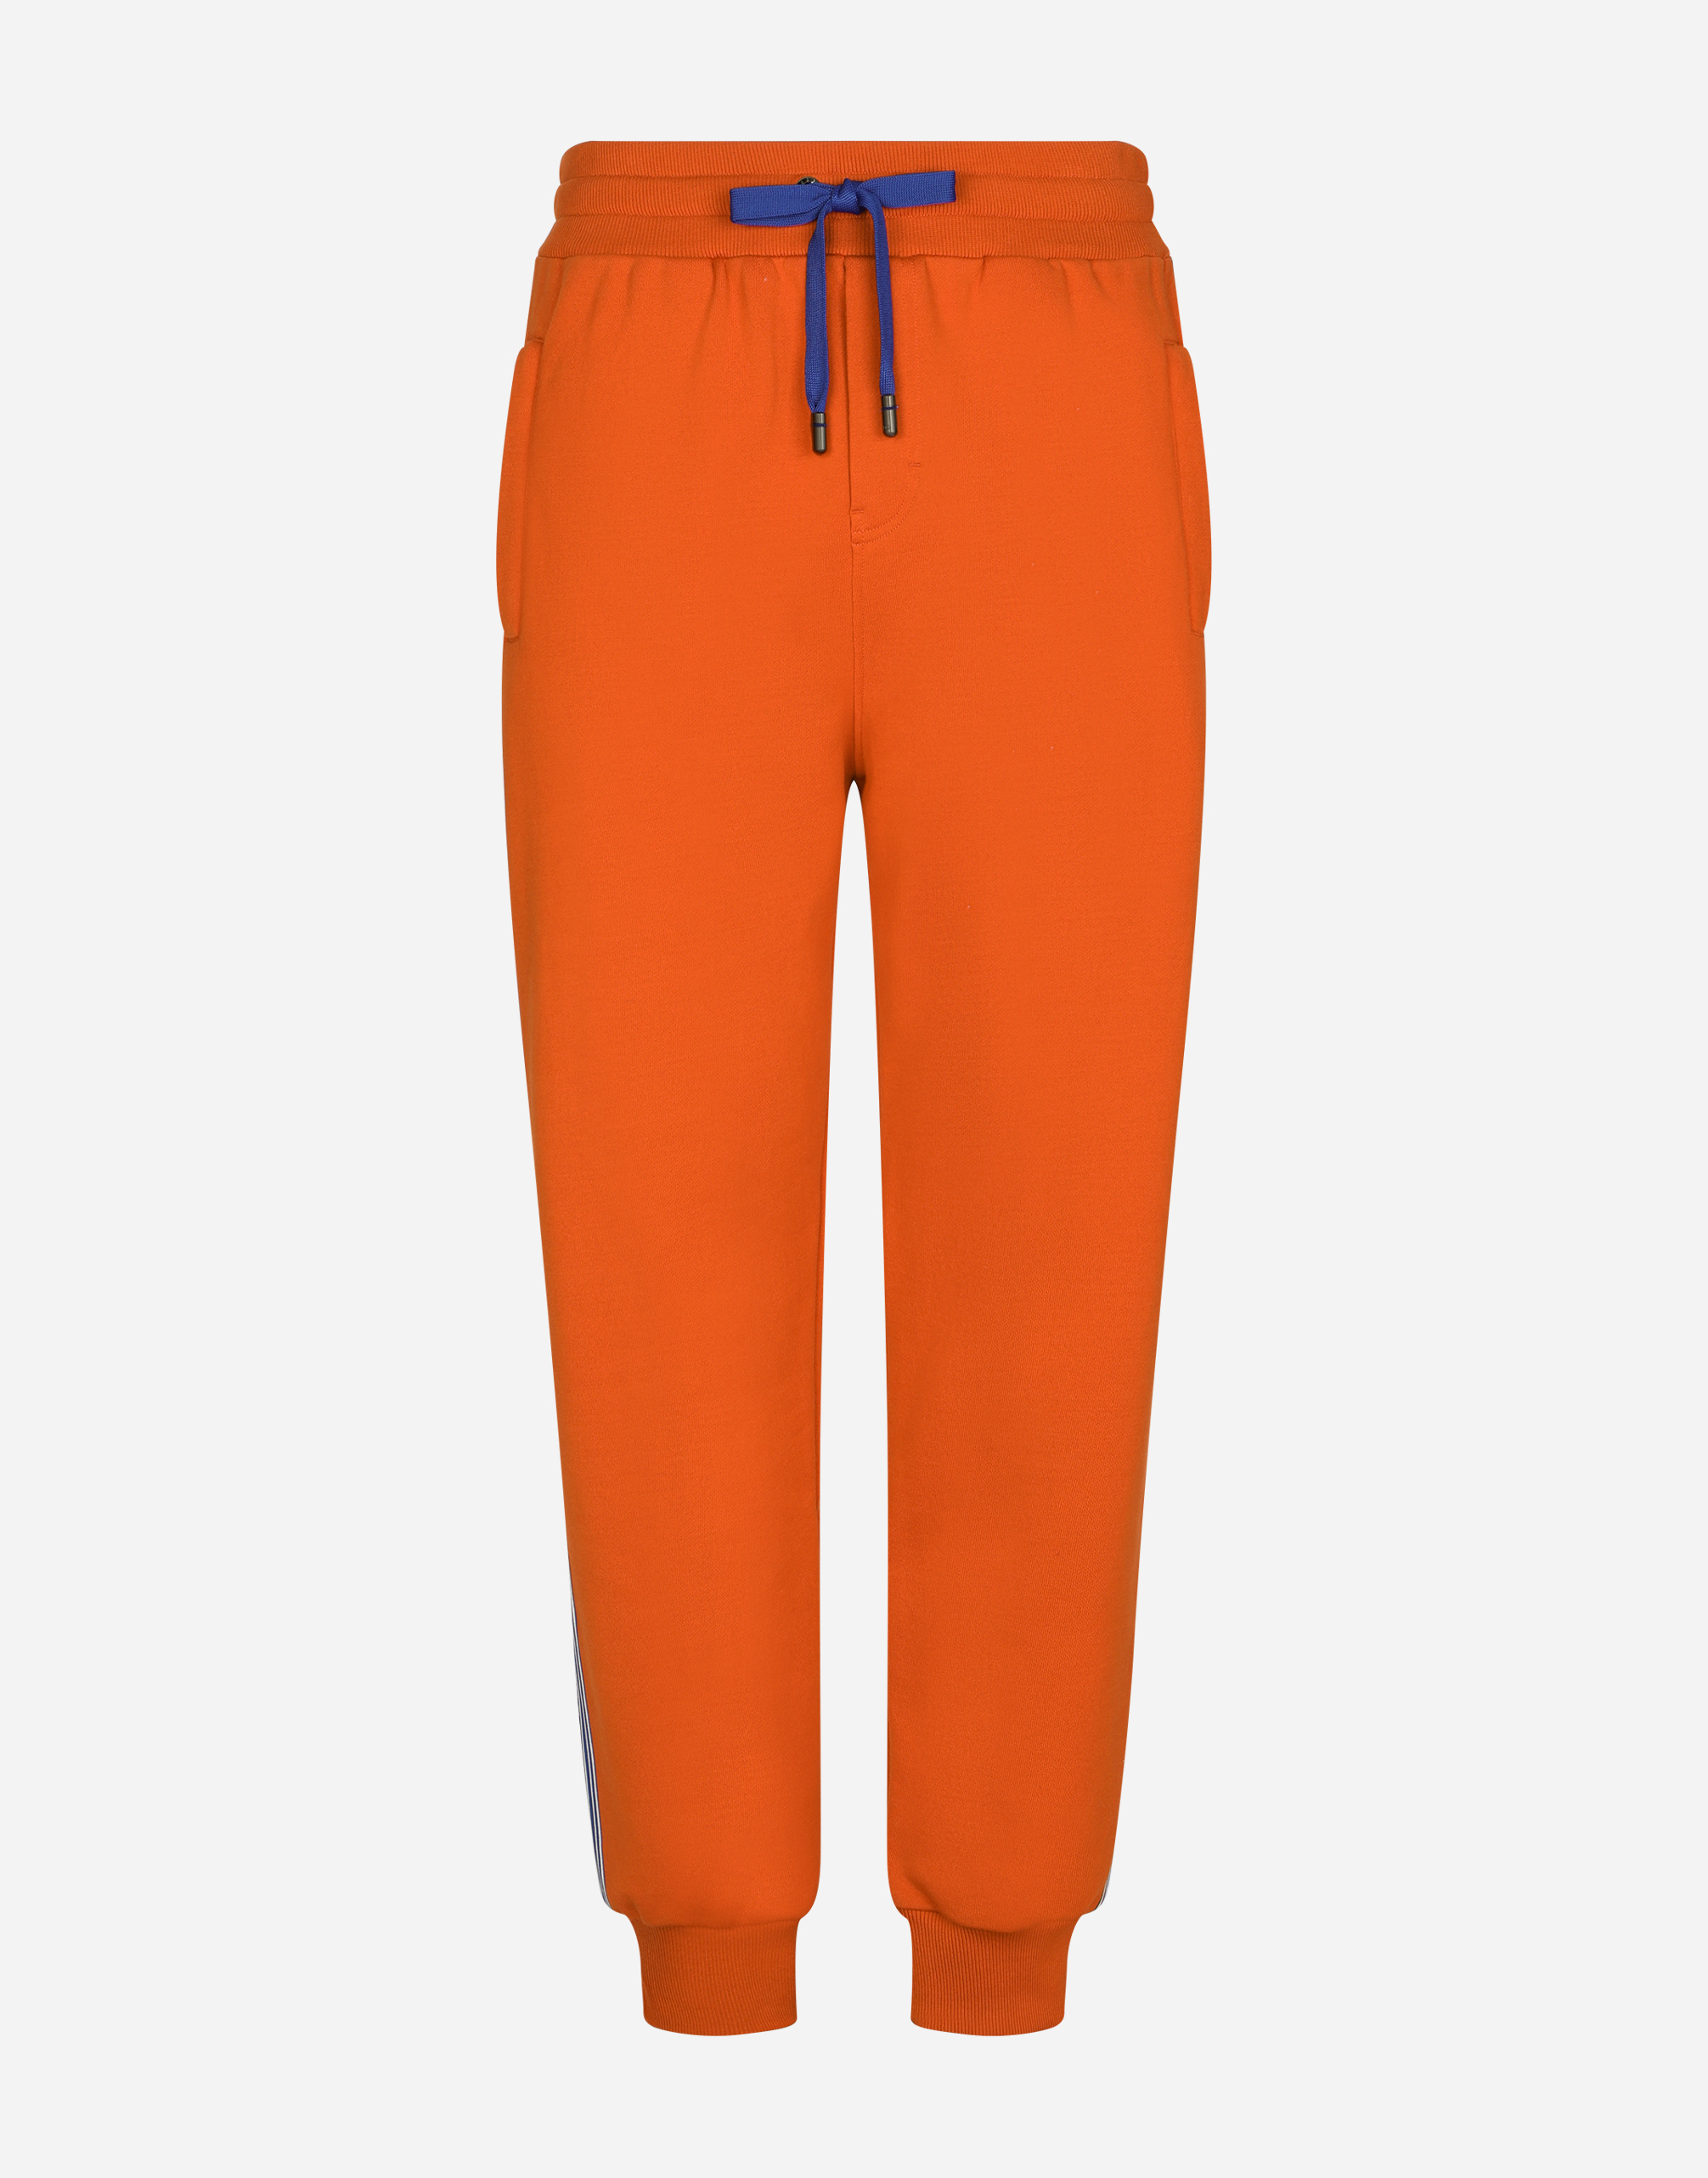 Jogging pants with branded side bands in Orange